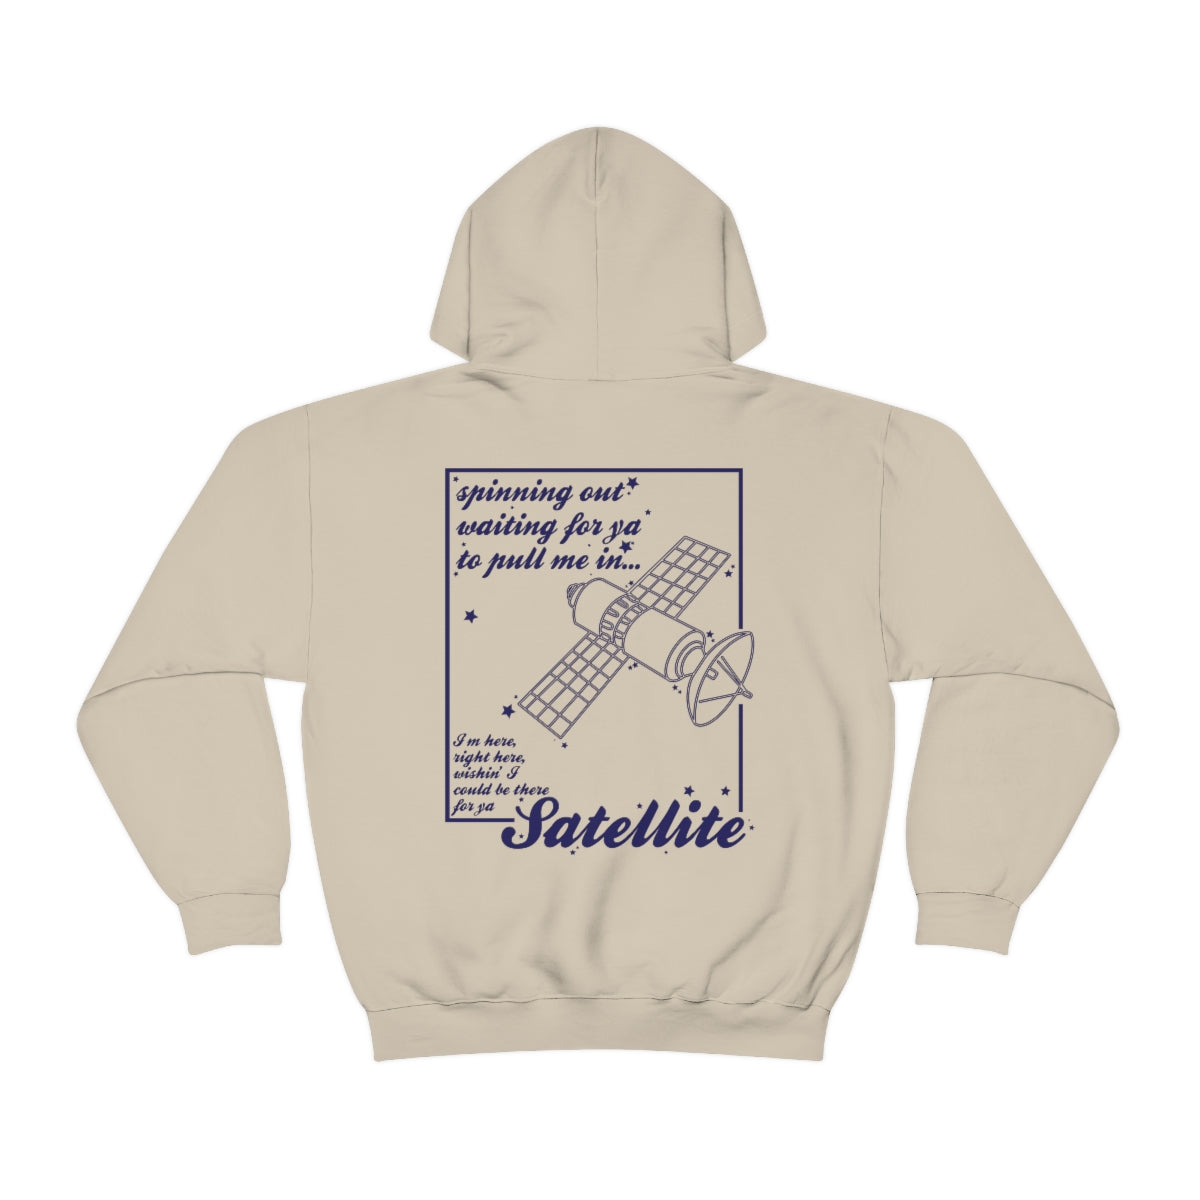 Satellite Hooded Sweatshirt